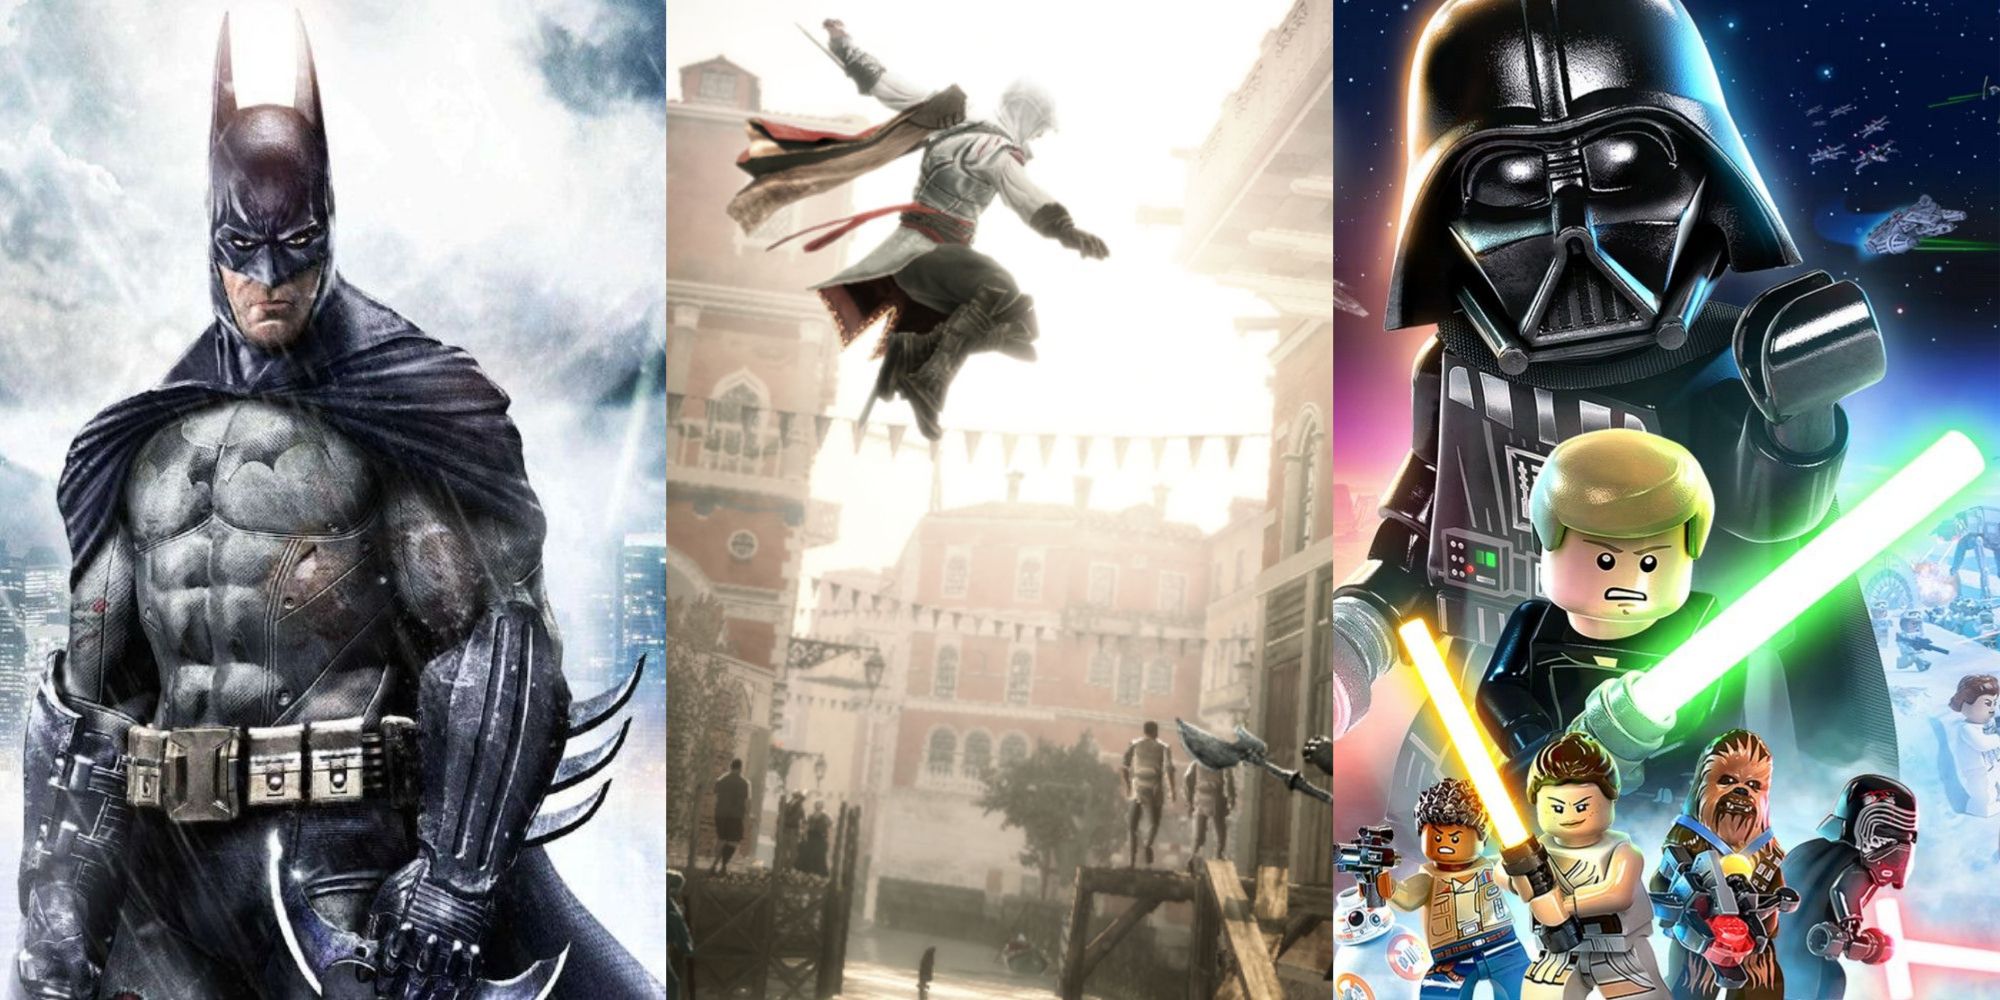 Split image collage of the cover art for Batman: Arkham Asylum, Assassin's Creed II, and Lego Star Wars: The Skywalker Saga.